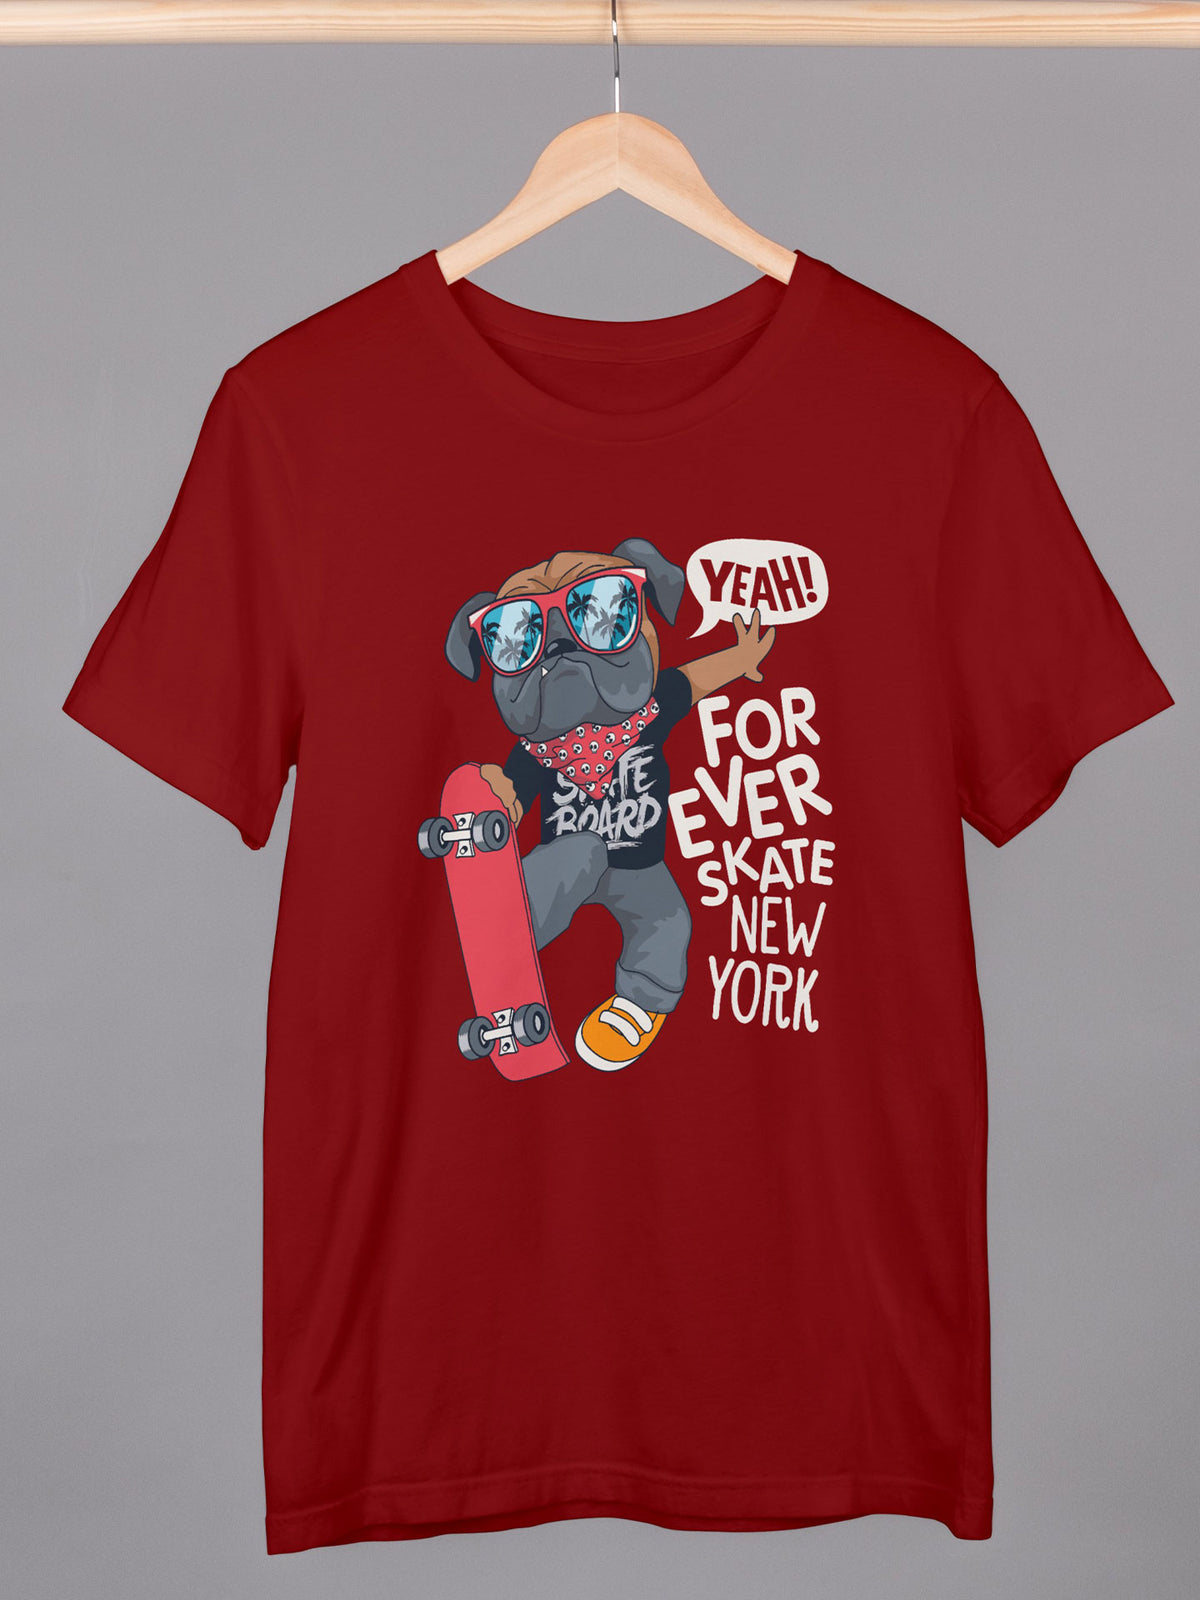 Men's Maroon For Ever Skate New York Printed T-shirt